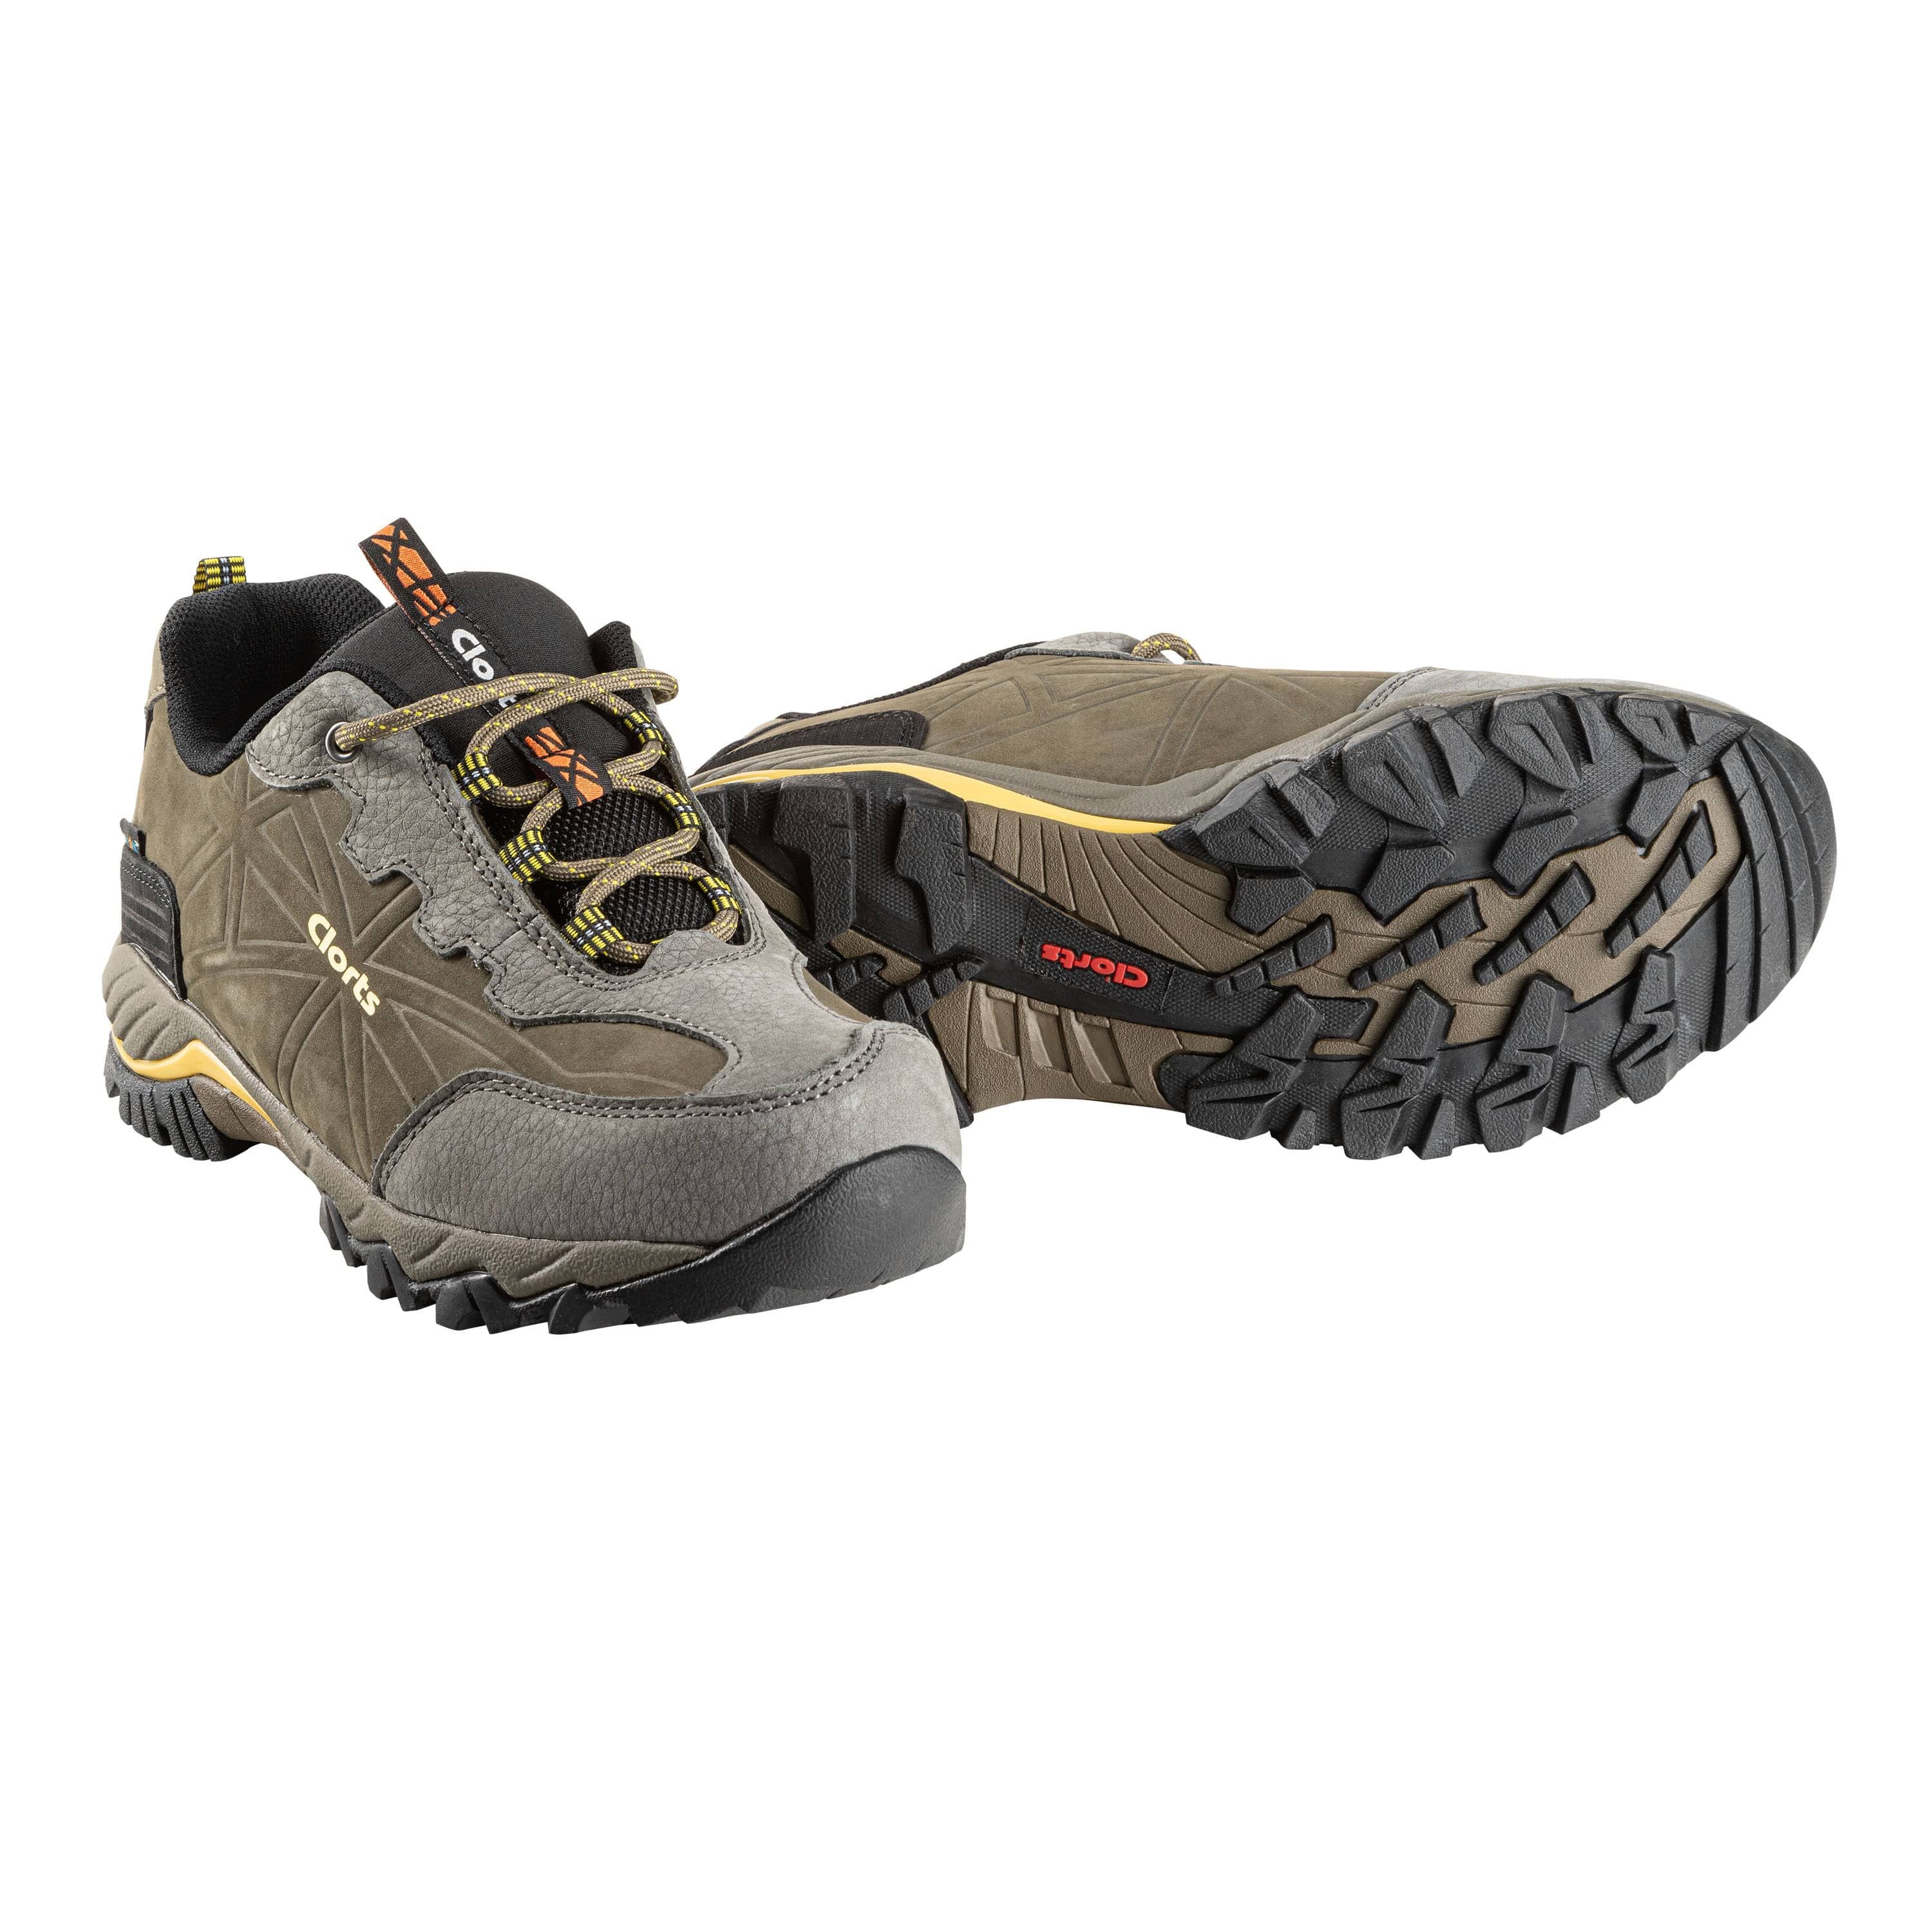 "Strive" Hiking shoes - Men's